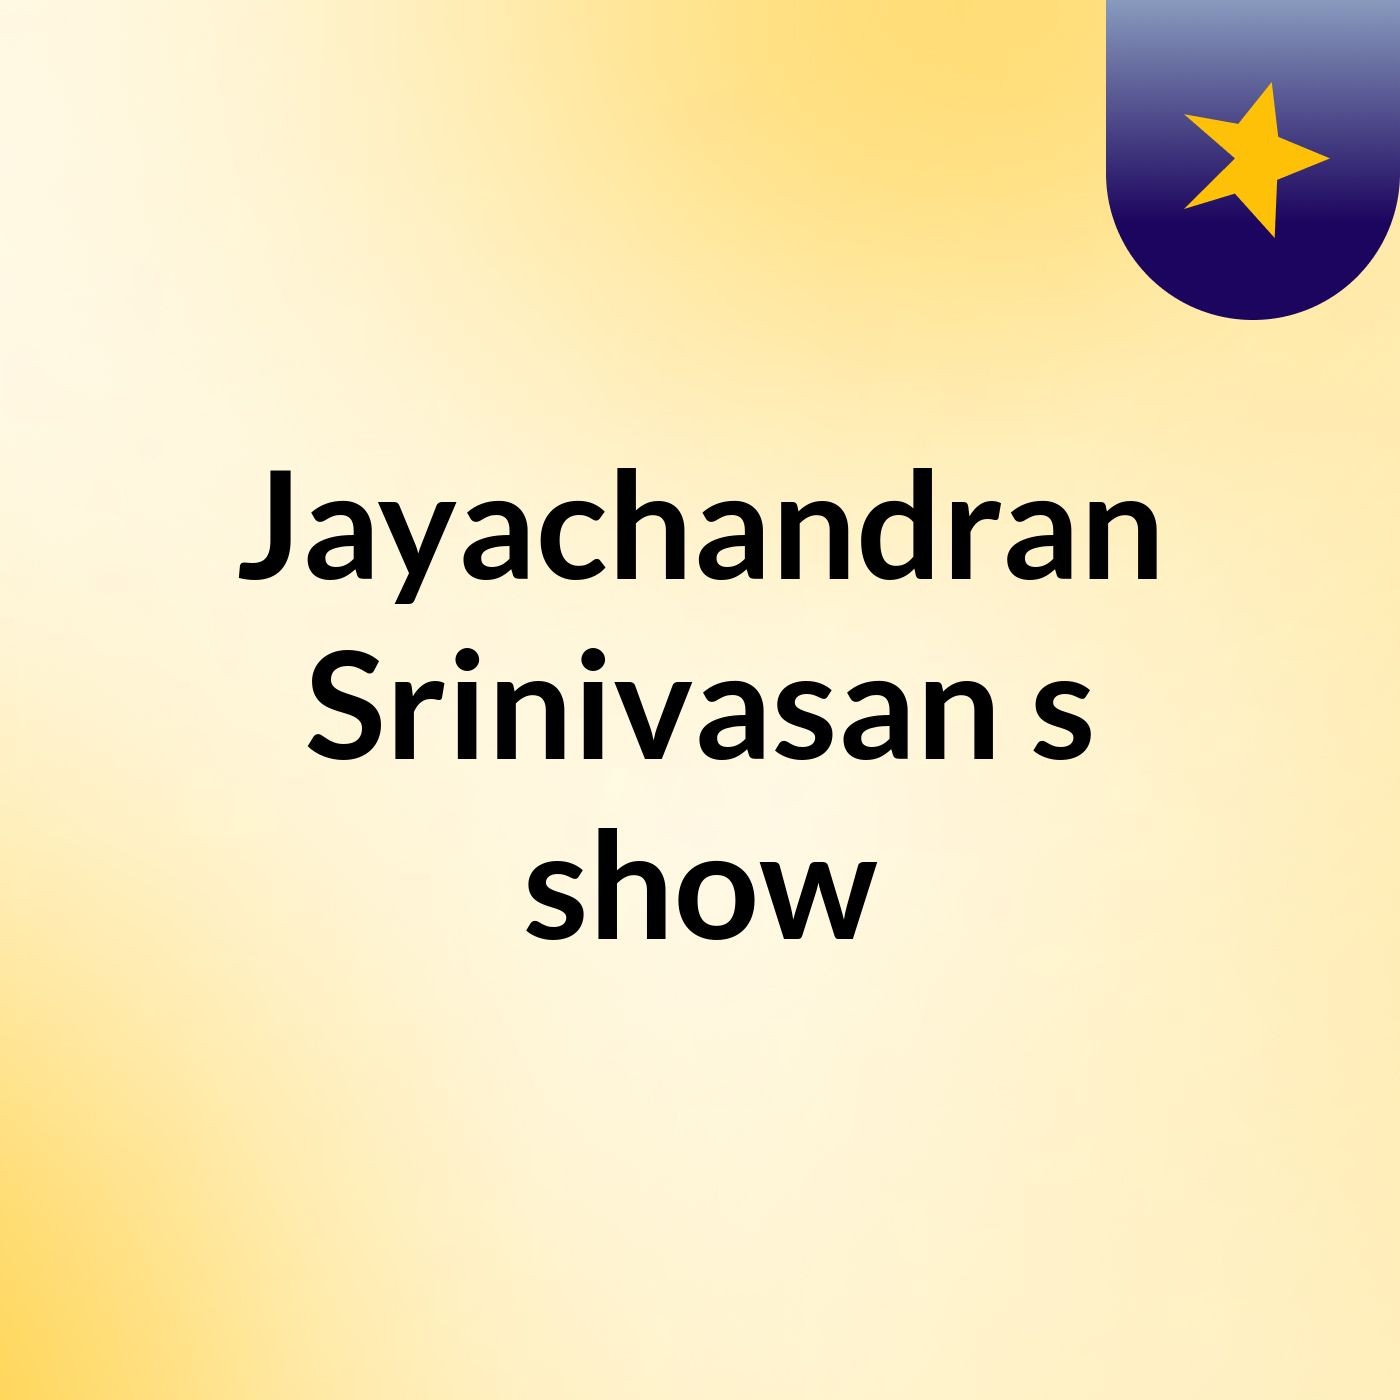 Episode 4 - Jayachandran Srinivasan's show